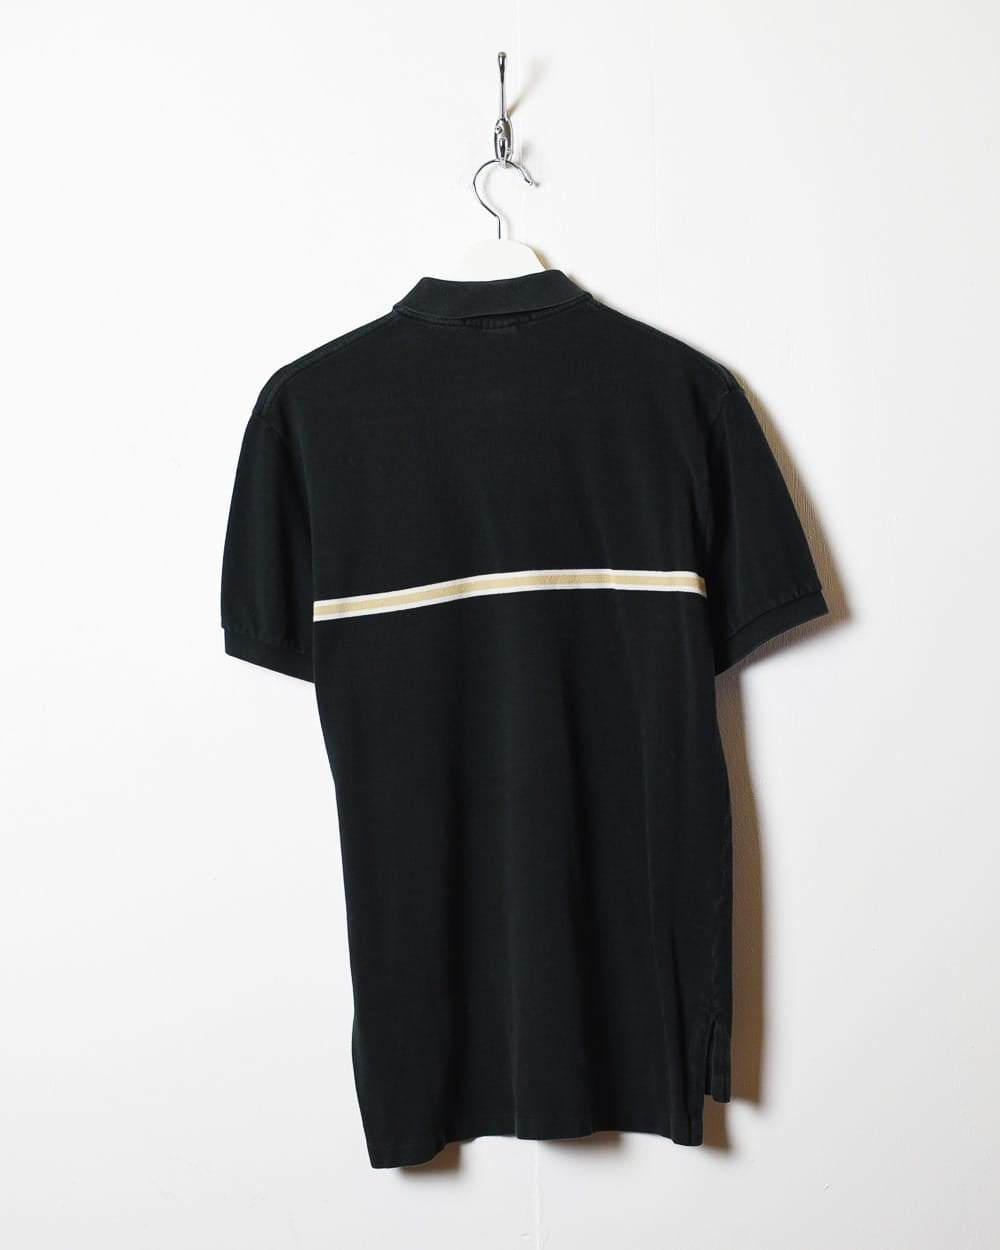 Black Polo Ralph Lauren Polo Shirt - Small